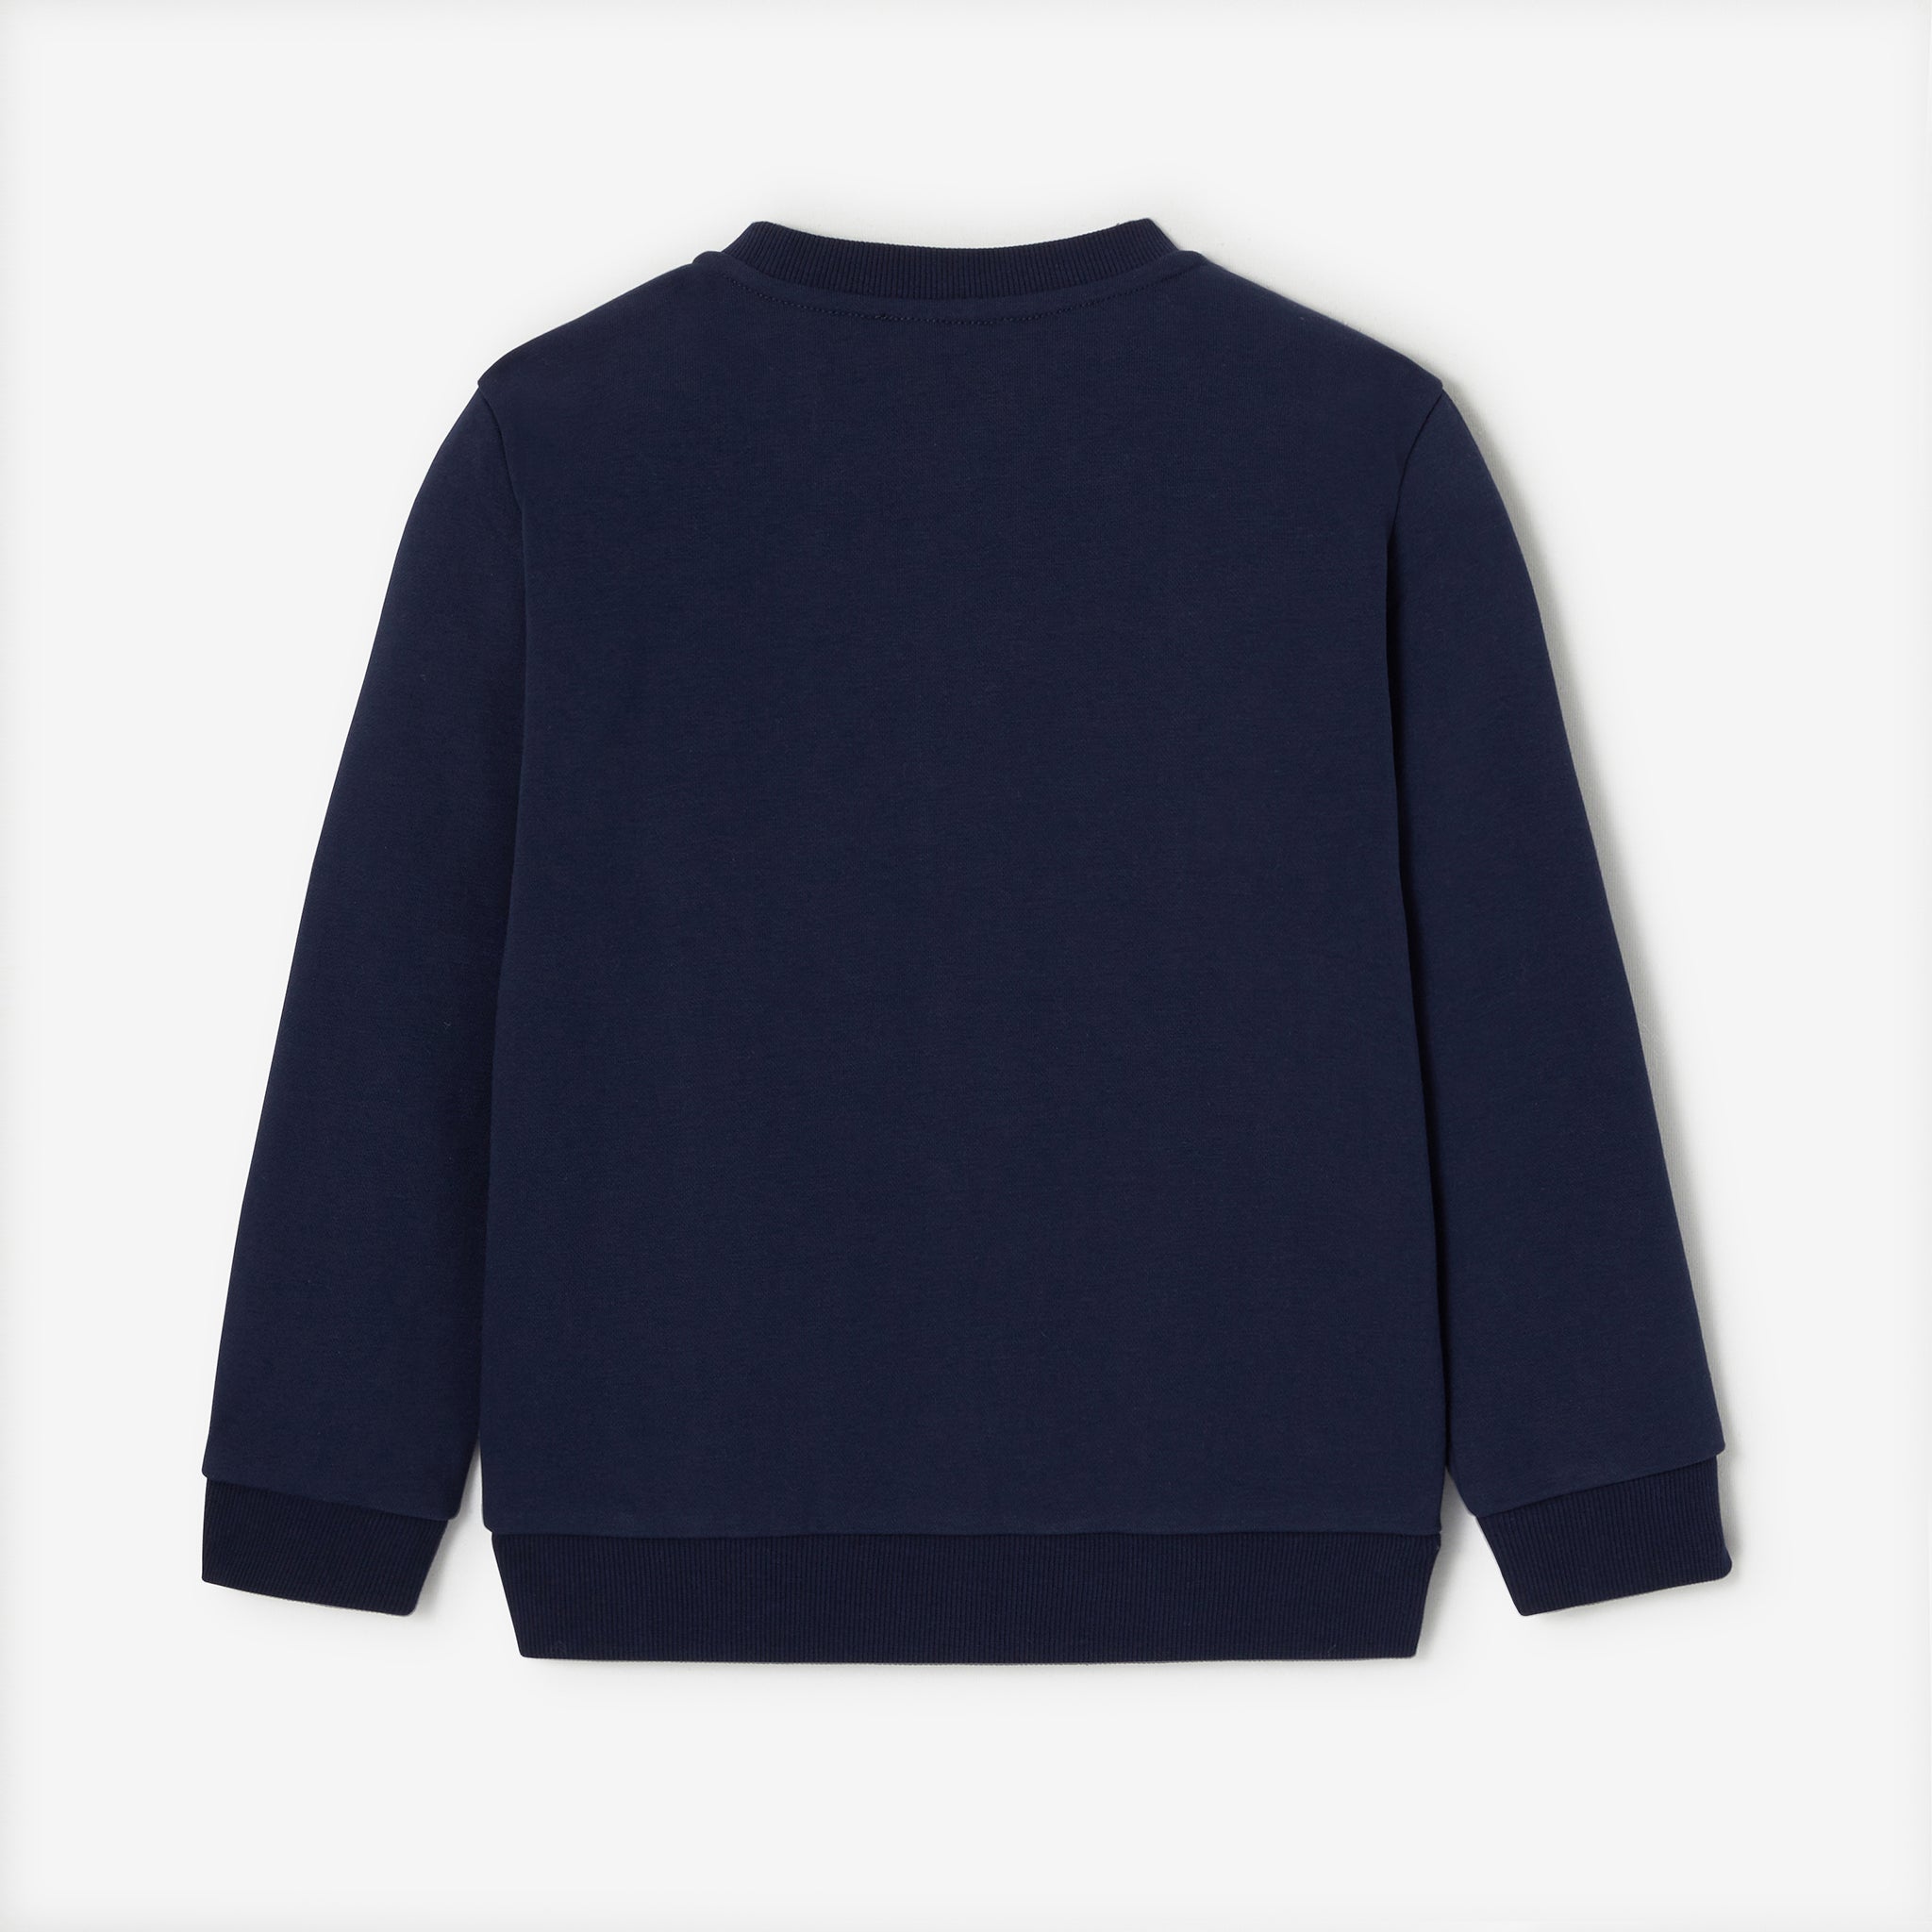 Andy & Evan Kids Boys Navy Check Intarsia Sweater Zip-up Set Blue, Size 8 :  Target